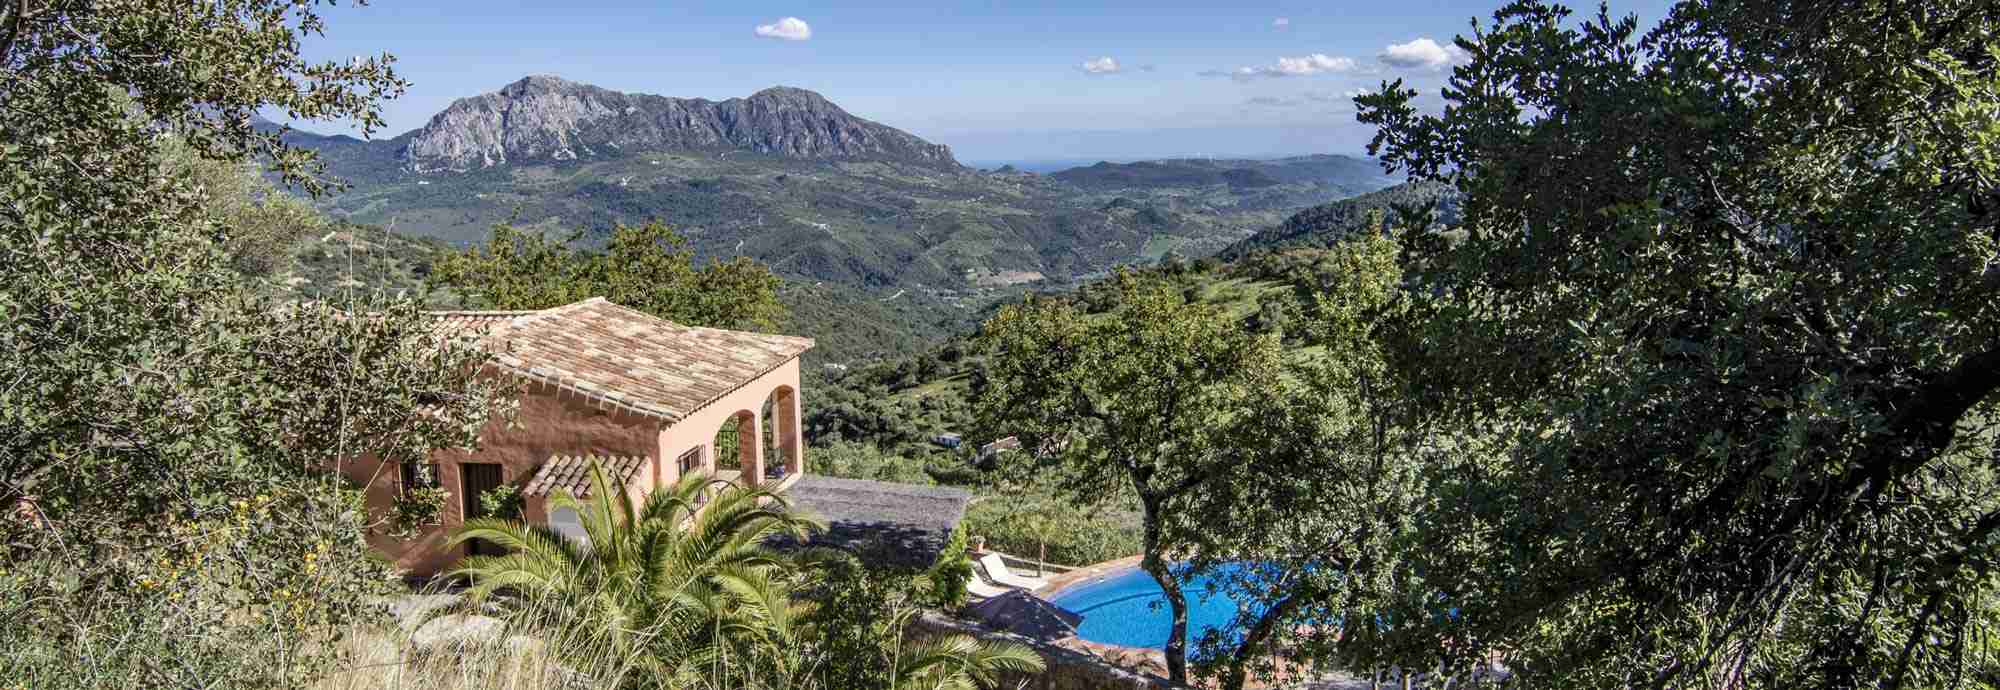 Tucked away villa overlooking a stunning Mediterranean valley and Gibraltar Bay